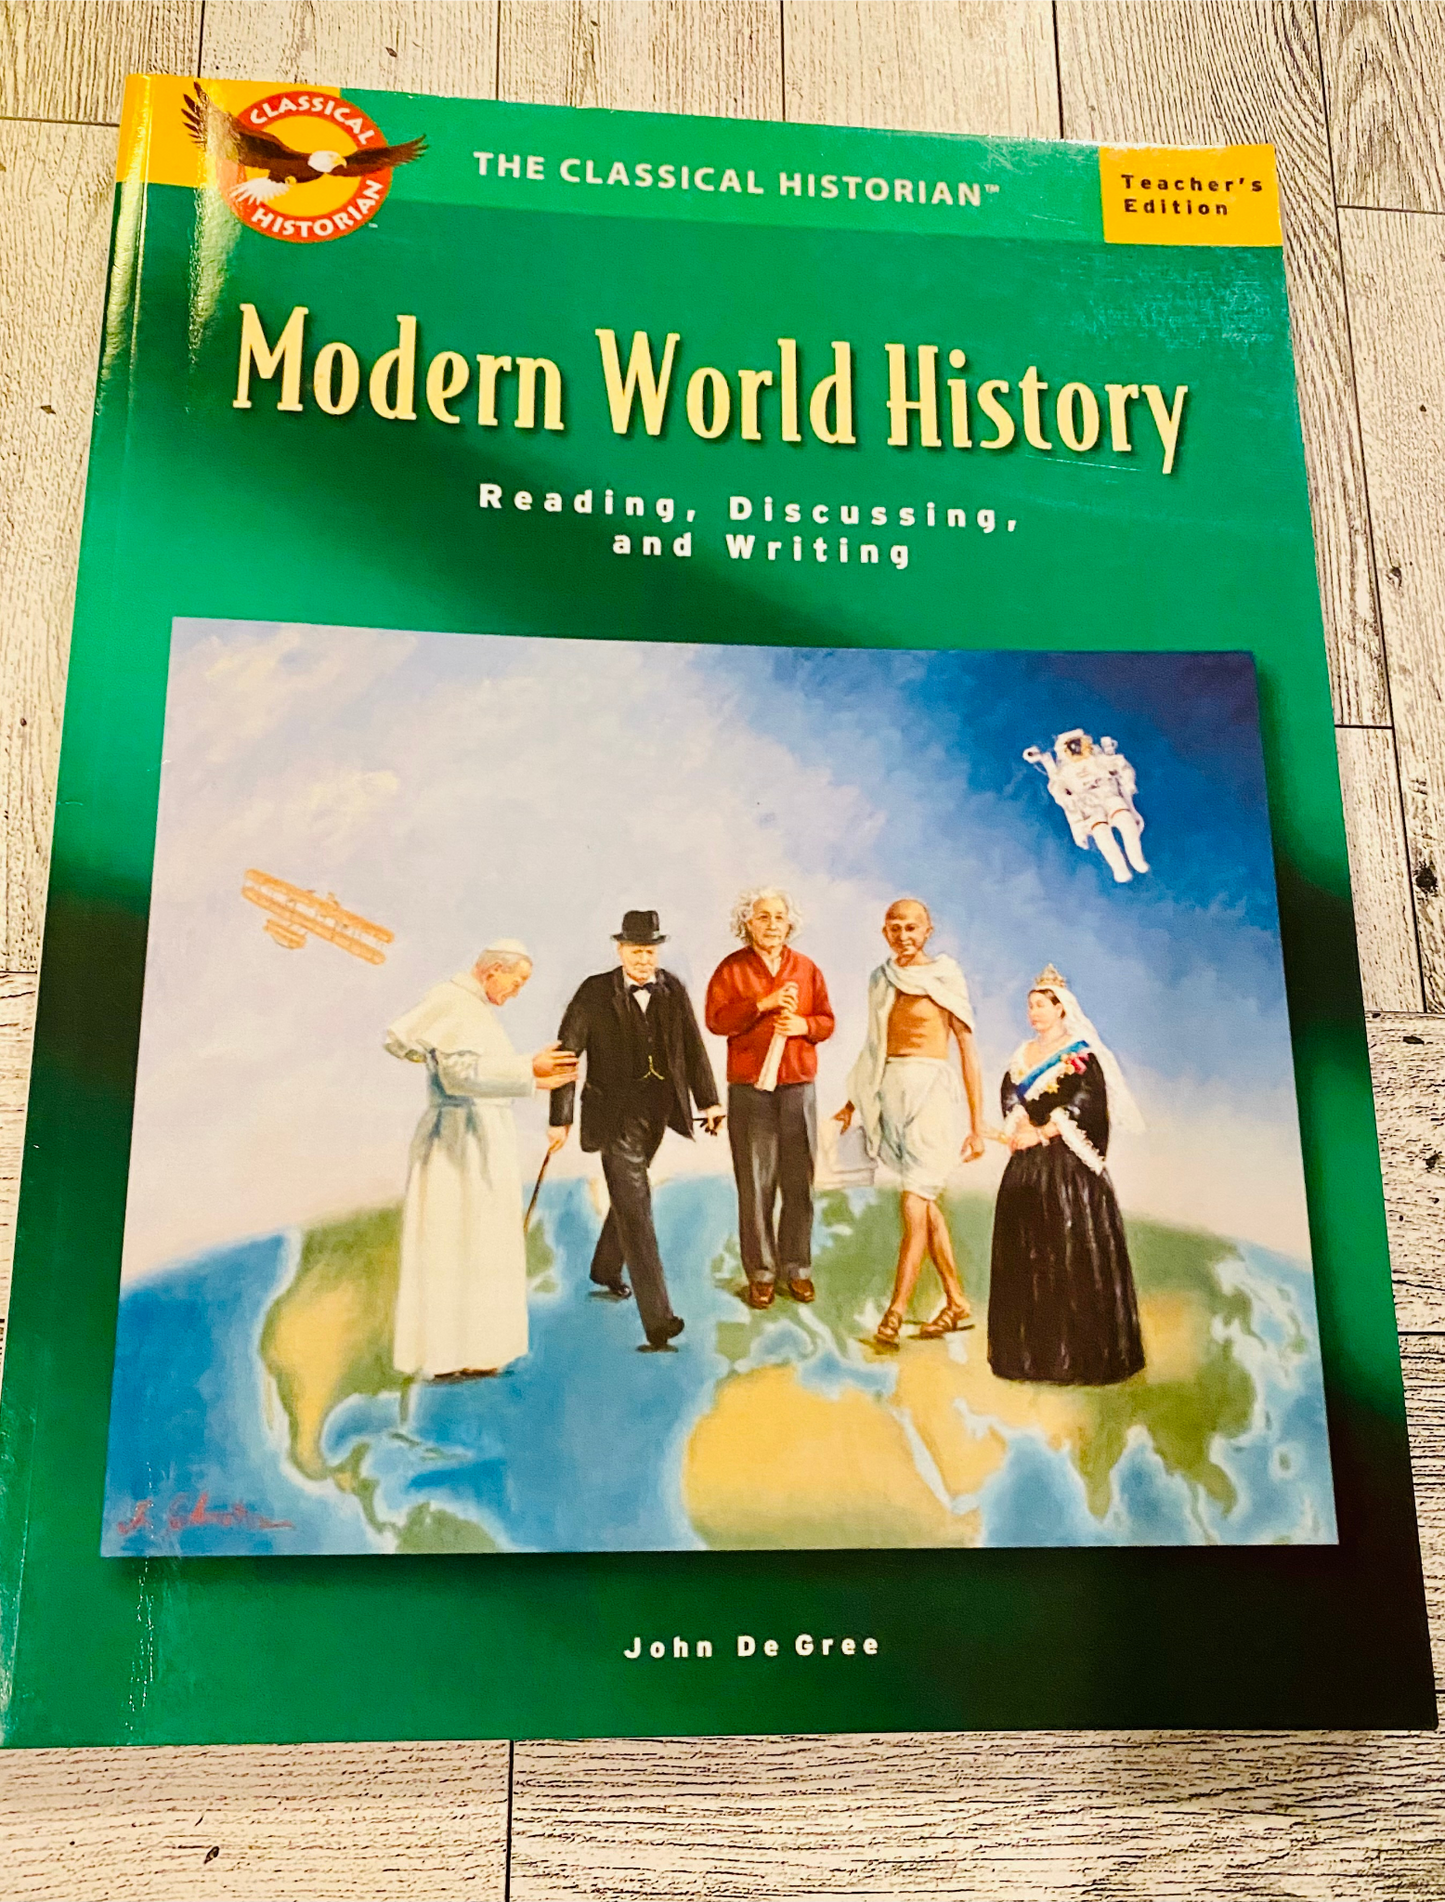 Take a Stand Modern World History - Anchored Homeschool Resource Center